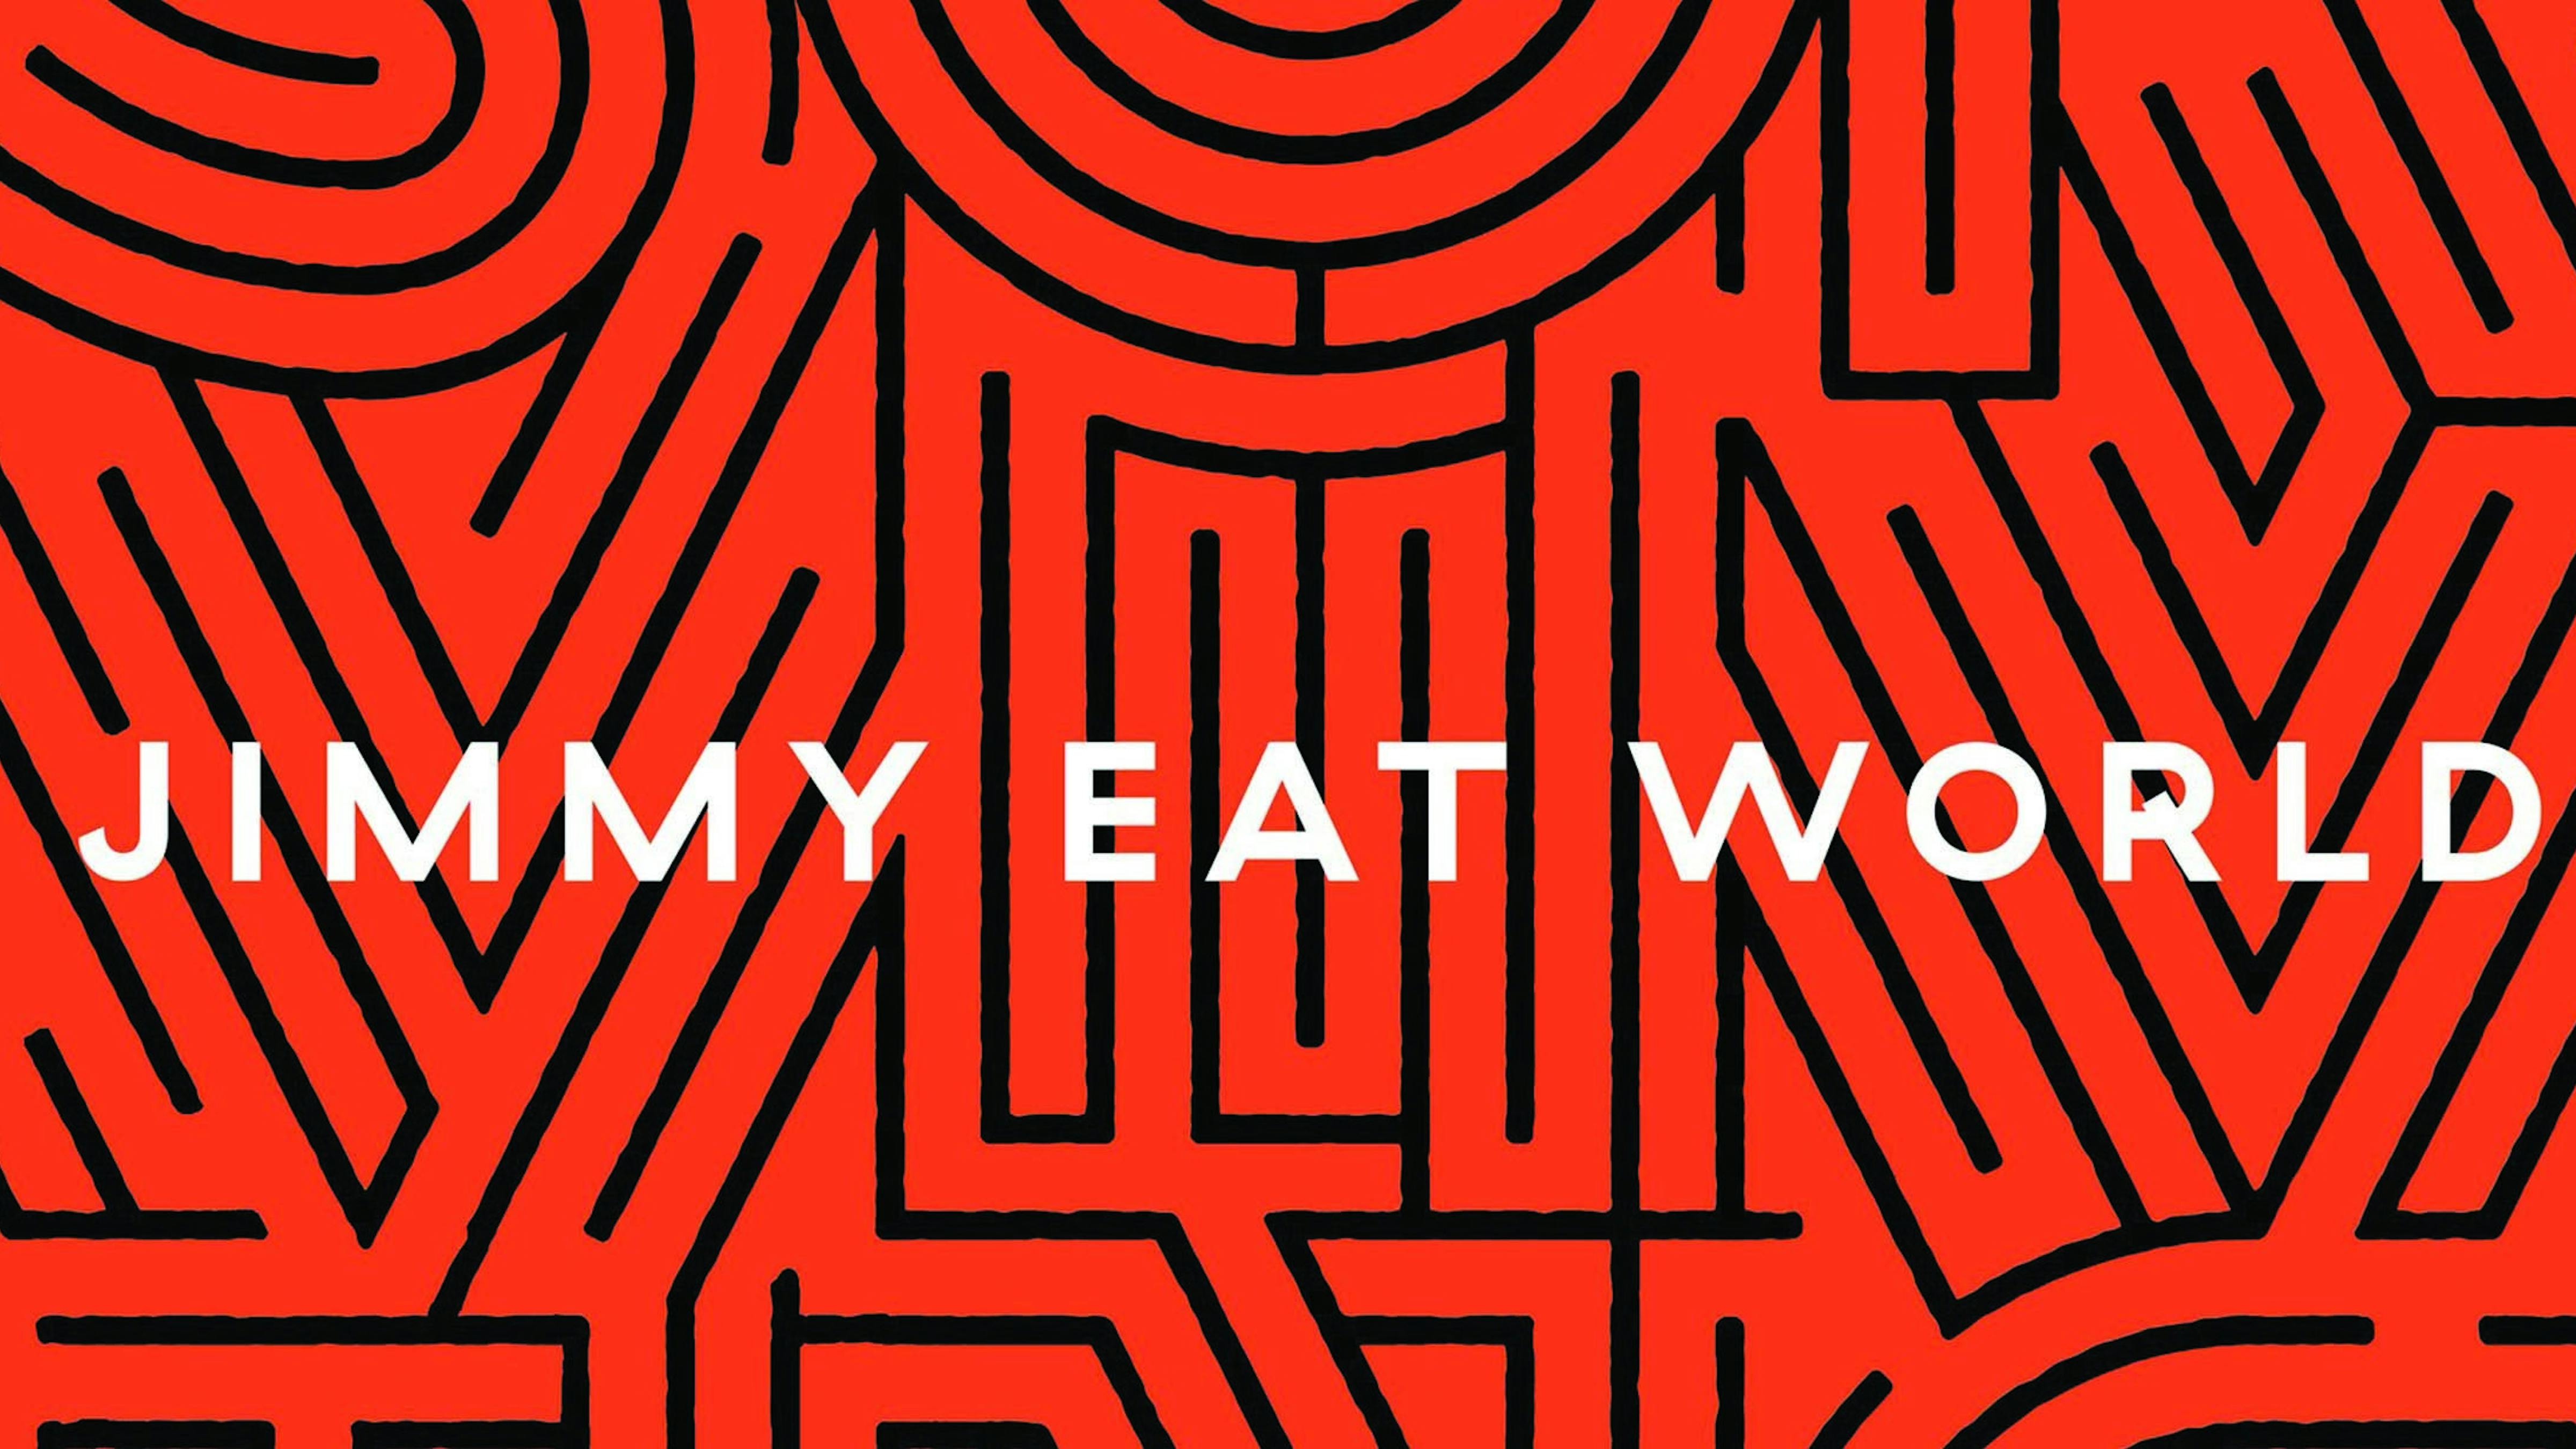 A world of something. Обложка рок группы Jimmy eat World. Surviving Jimmy eat World. Jimmy eat World футболка. Jimmy eat World принт.